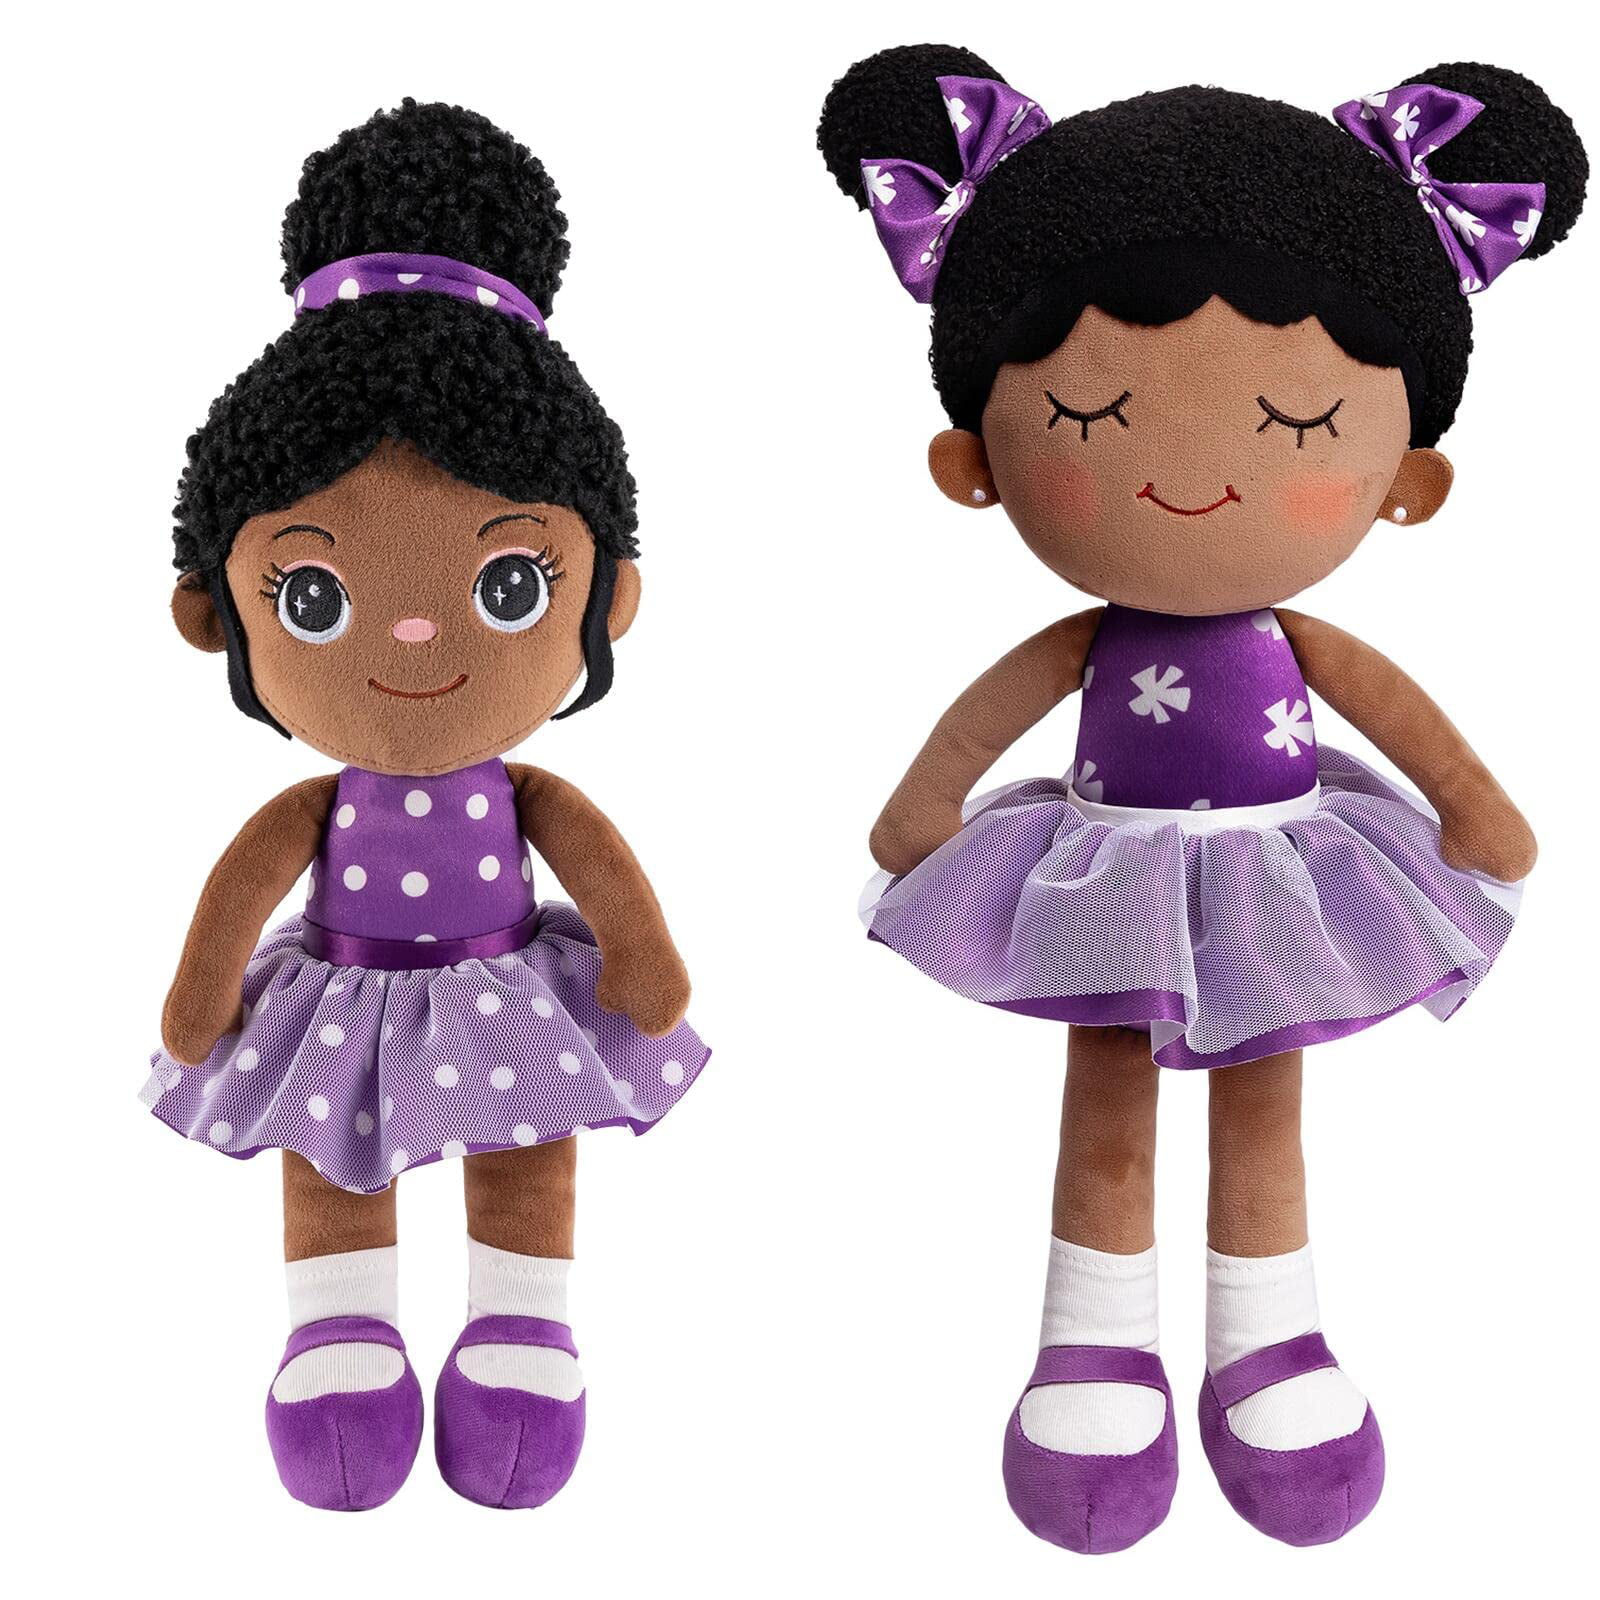 First Baby Doll Plush Rag Doll Sleeping Cuddle Buddy Doll Toy for Kids 15 Soft Baby Doll for Girls 